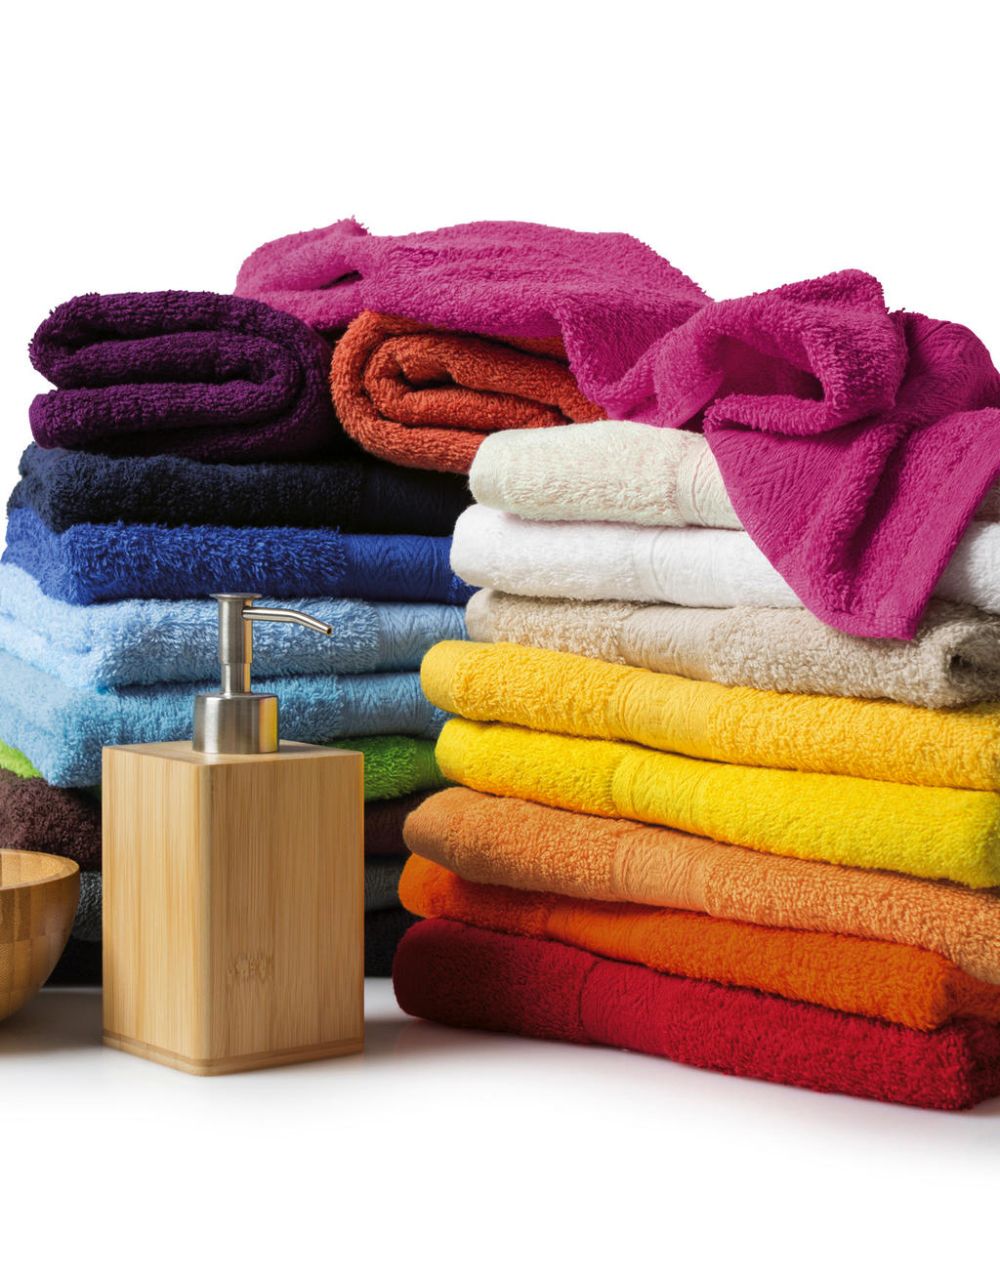 Tücher und bademantel towels by jassz frs00964 gedruckt bilden 2